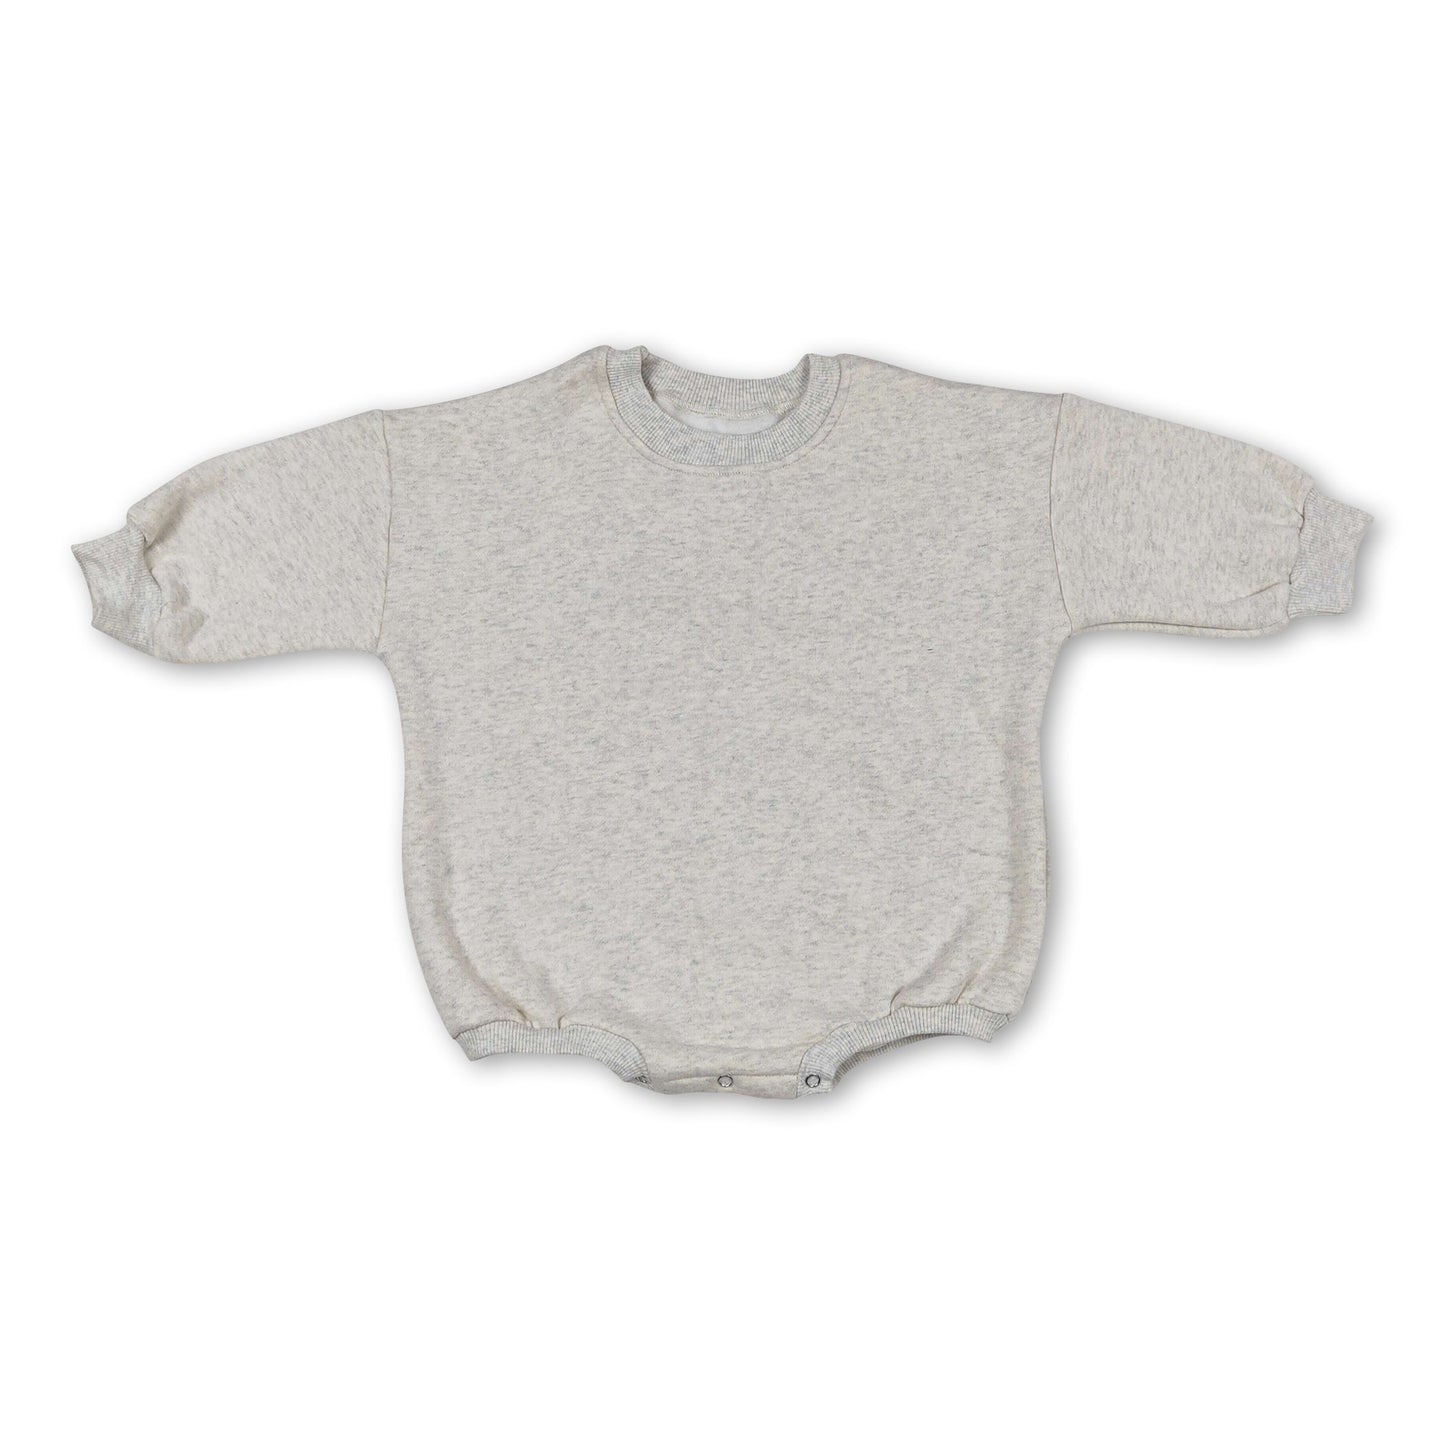 Grey cotton long sleeves baby sweat romper